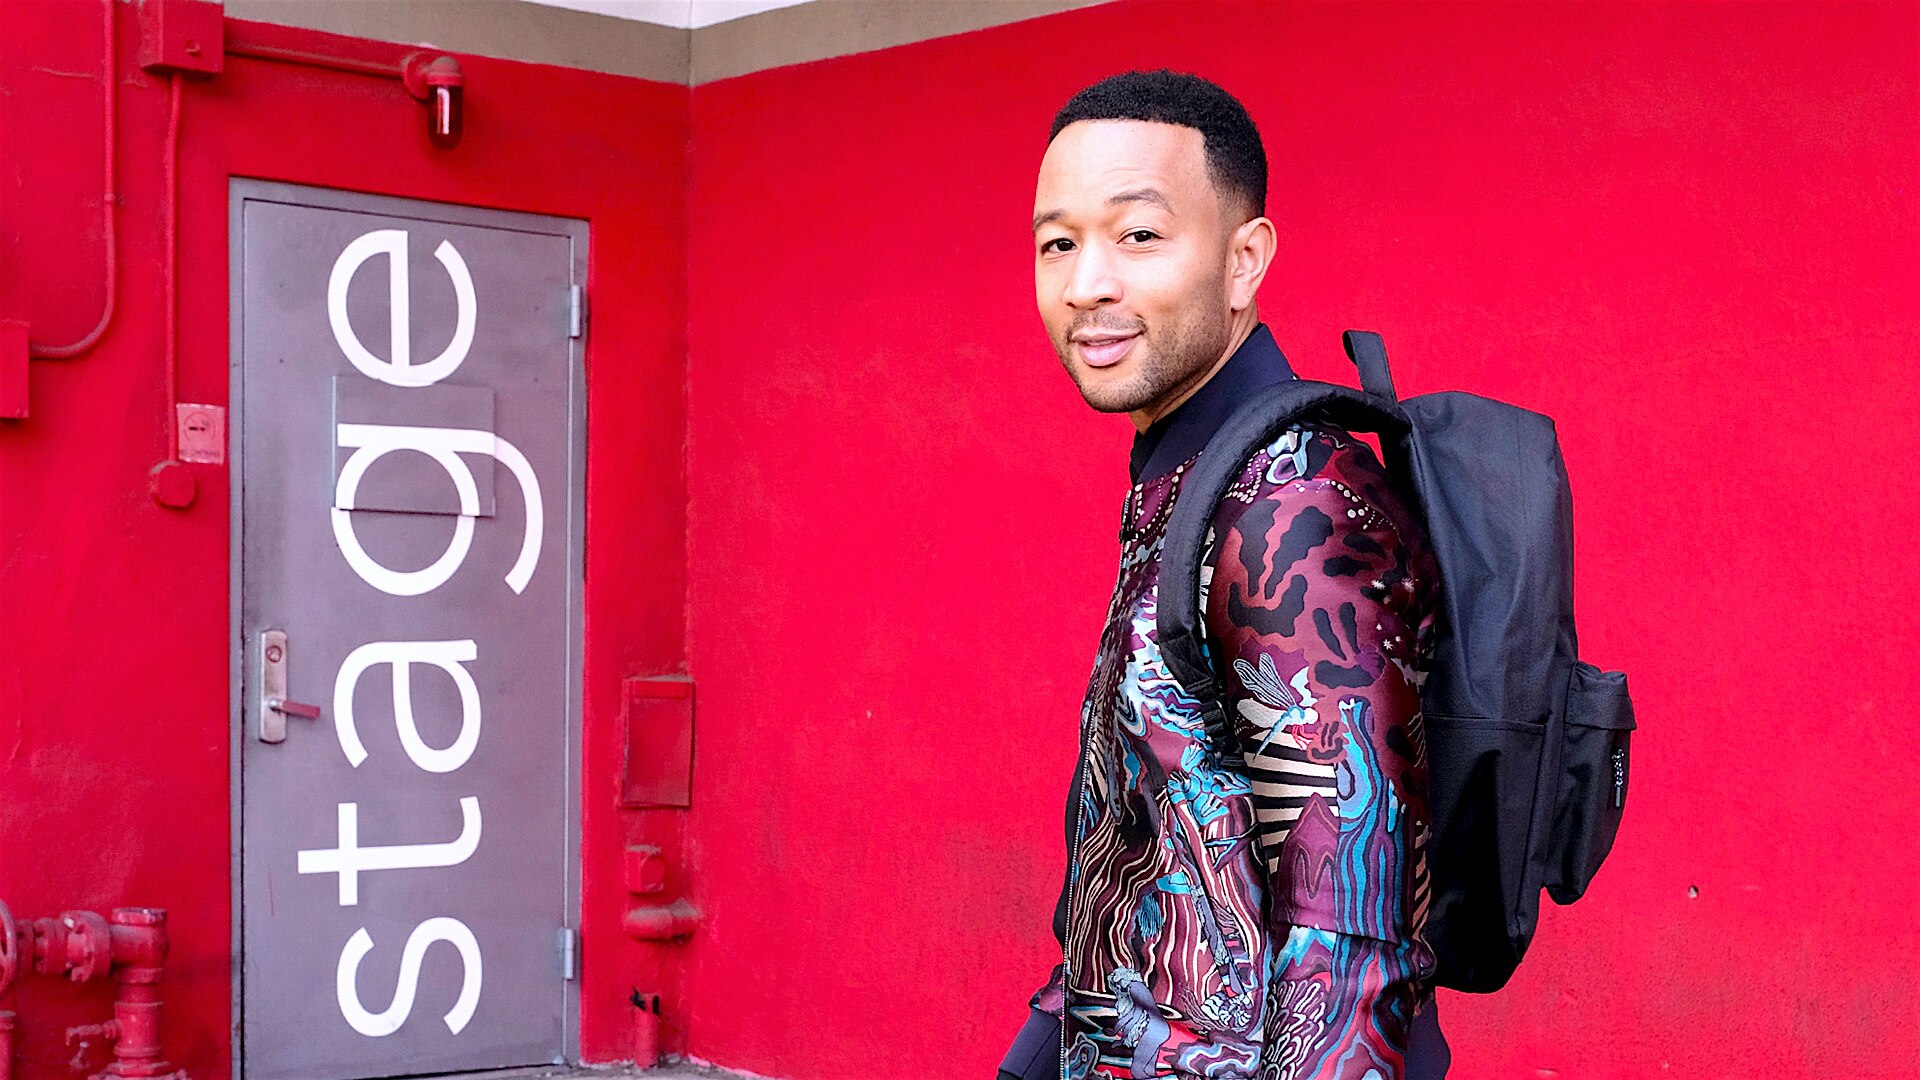 Watch The Voice Sneak Peek: John Legend's First Day - NBC.com